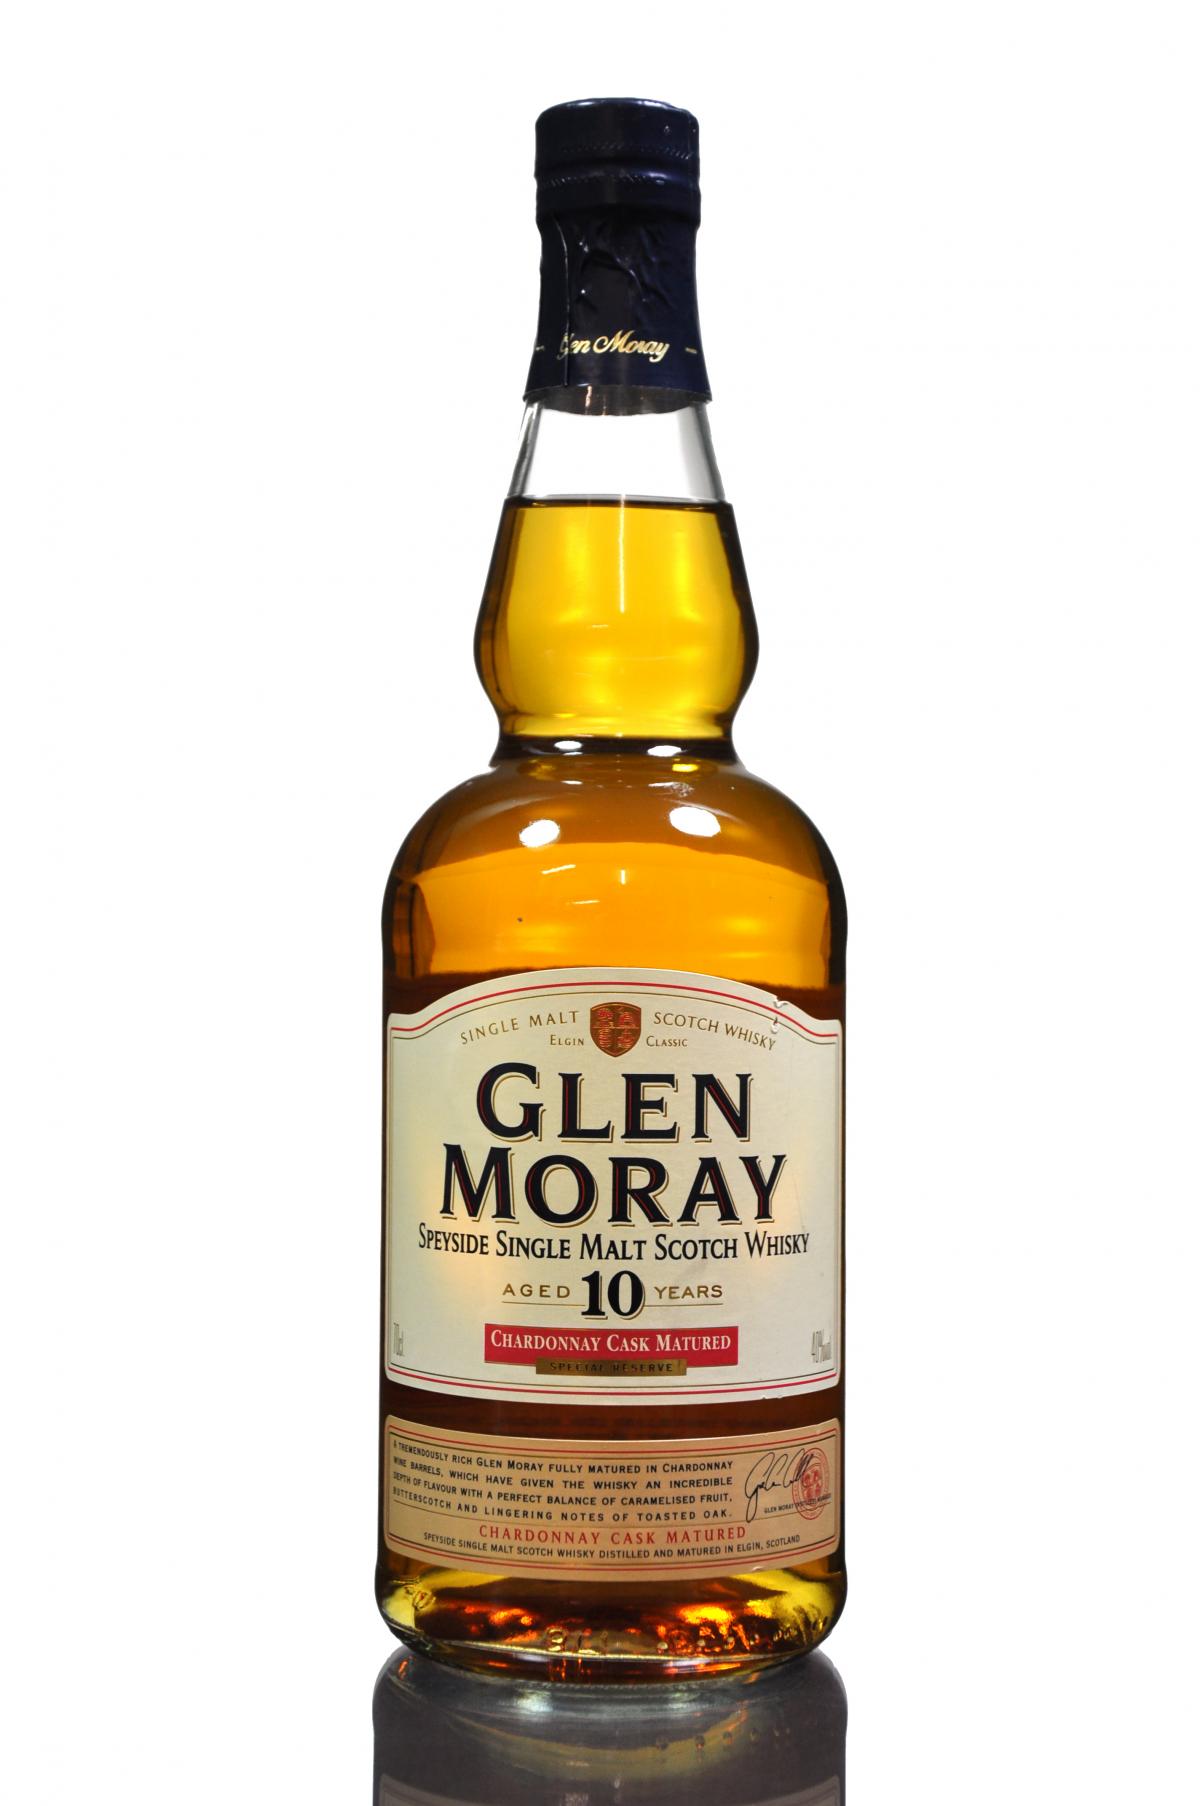 Glen Moray 10 Year Old - Chardonnay Casks